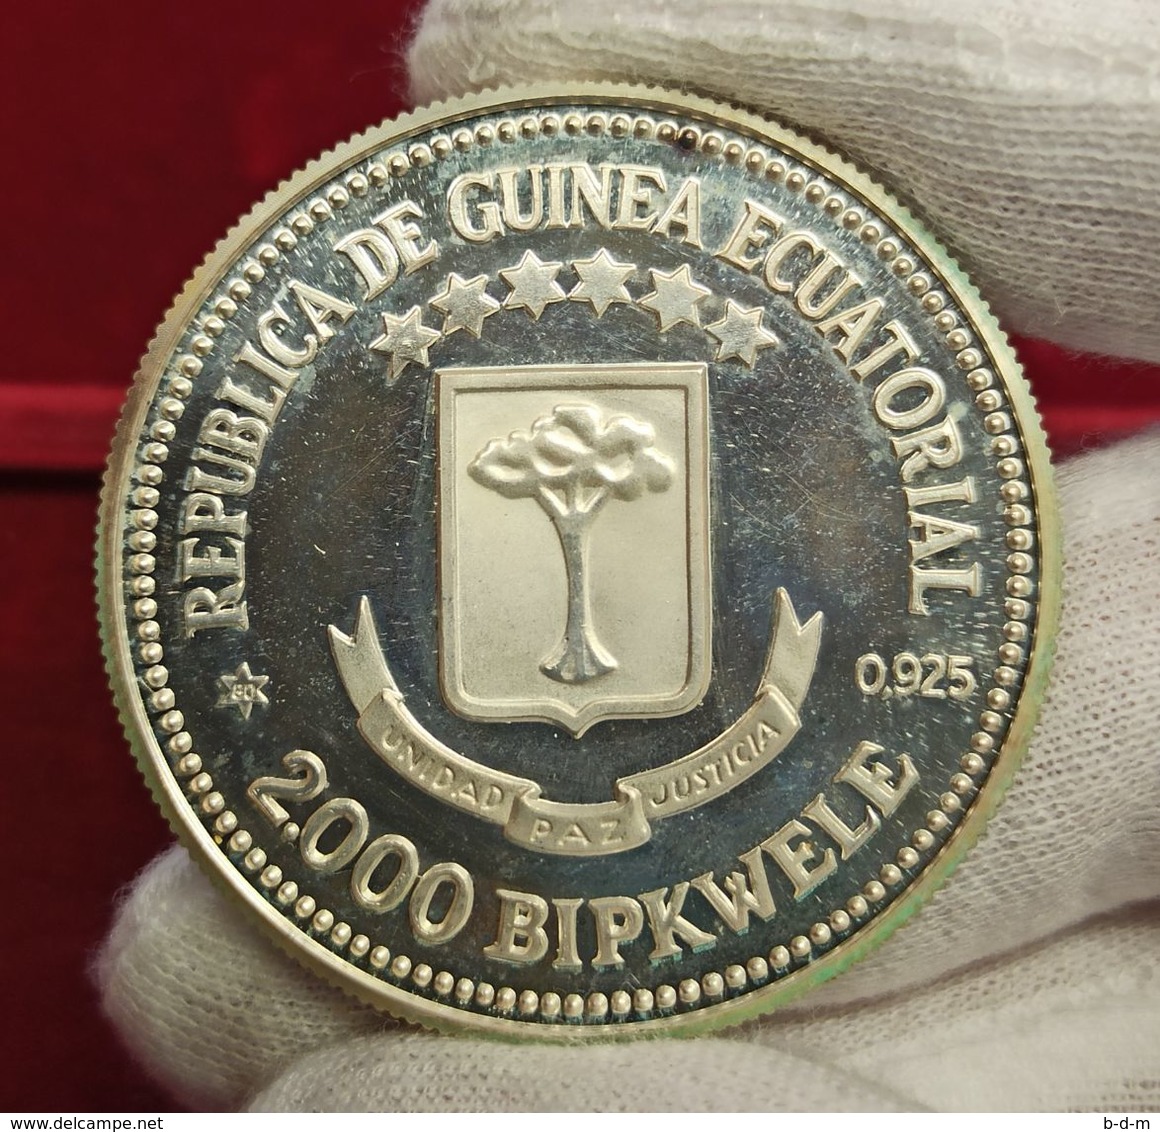 Guinea Ecuatorial 2000 Bipkwele Visita De Los Reyes 1979 X# 2 Plata Proof - Guinée Equatoriale